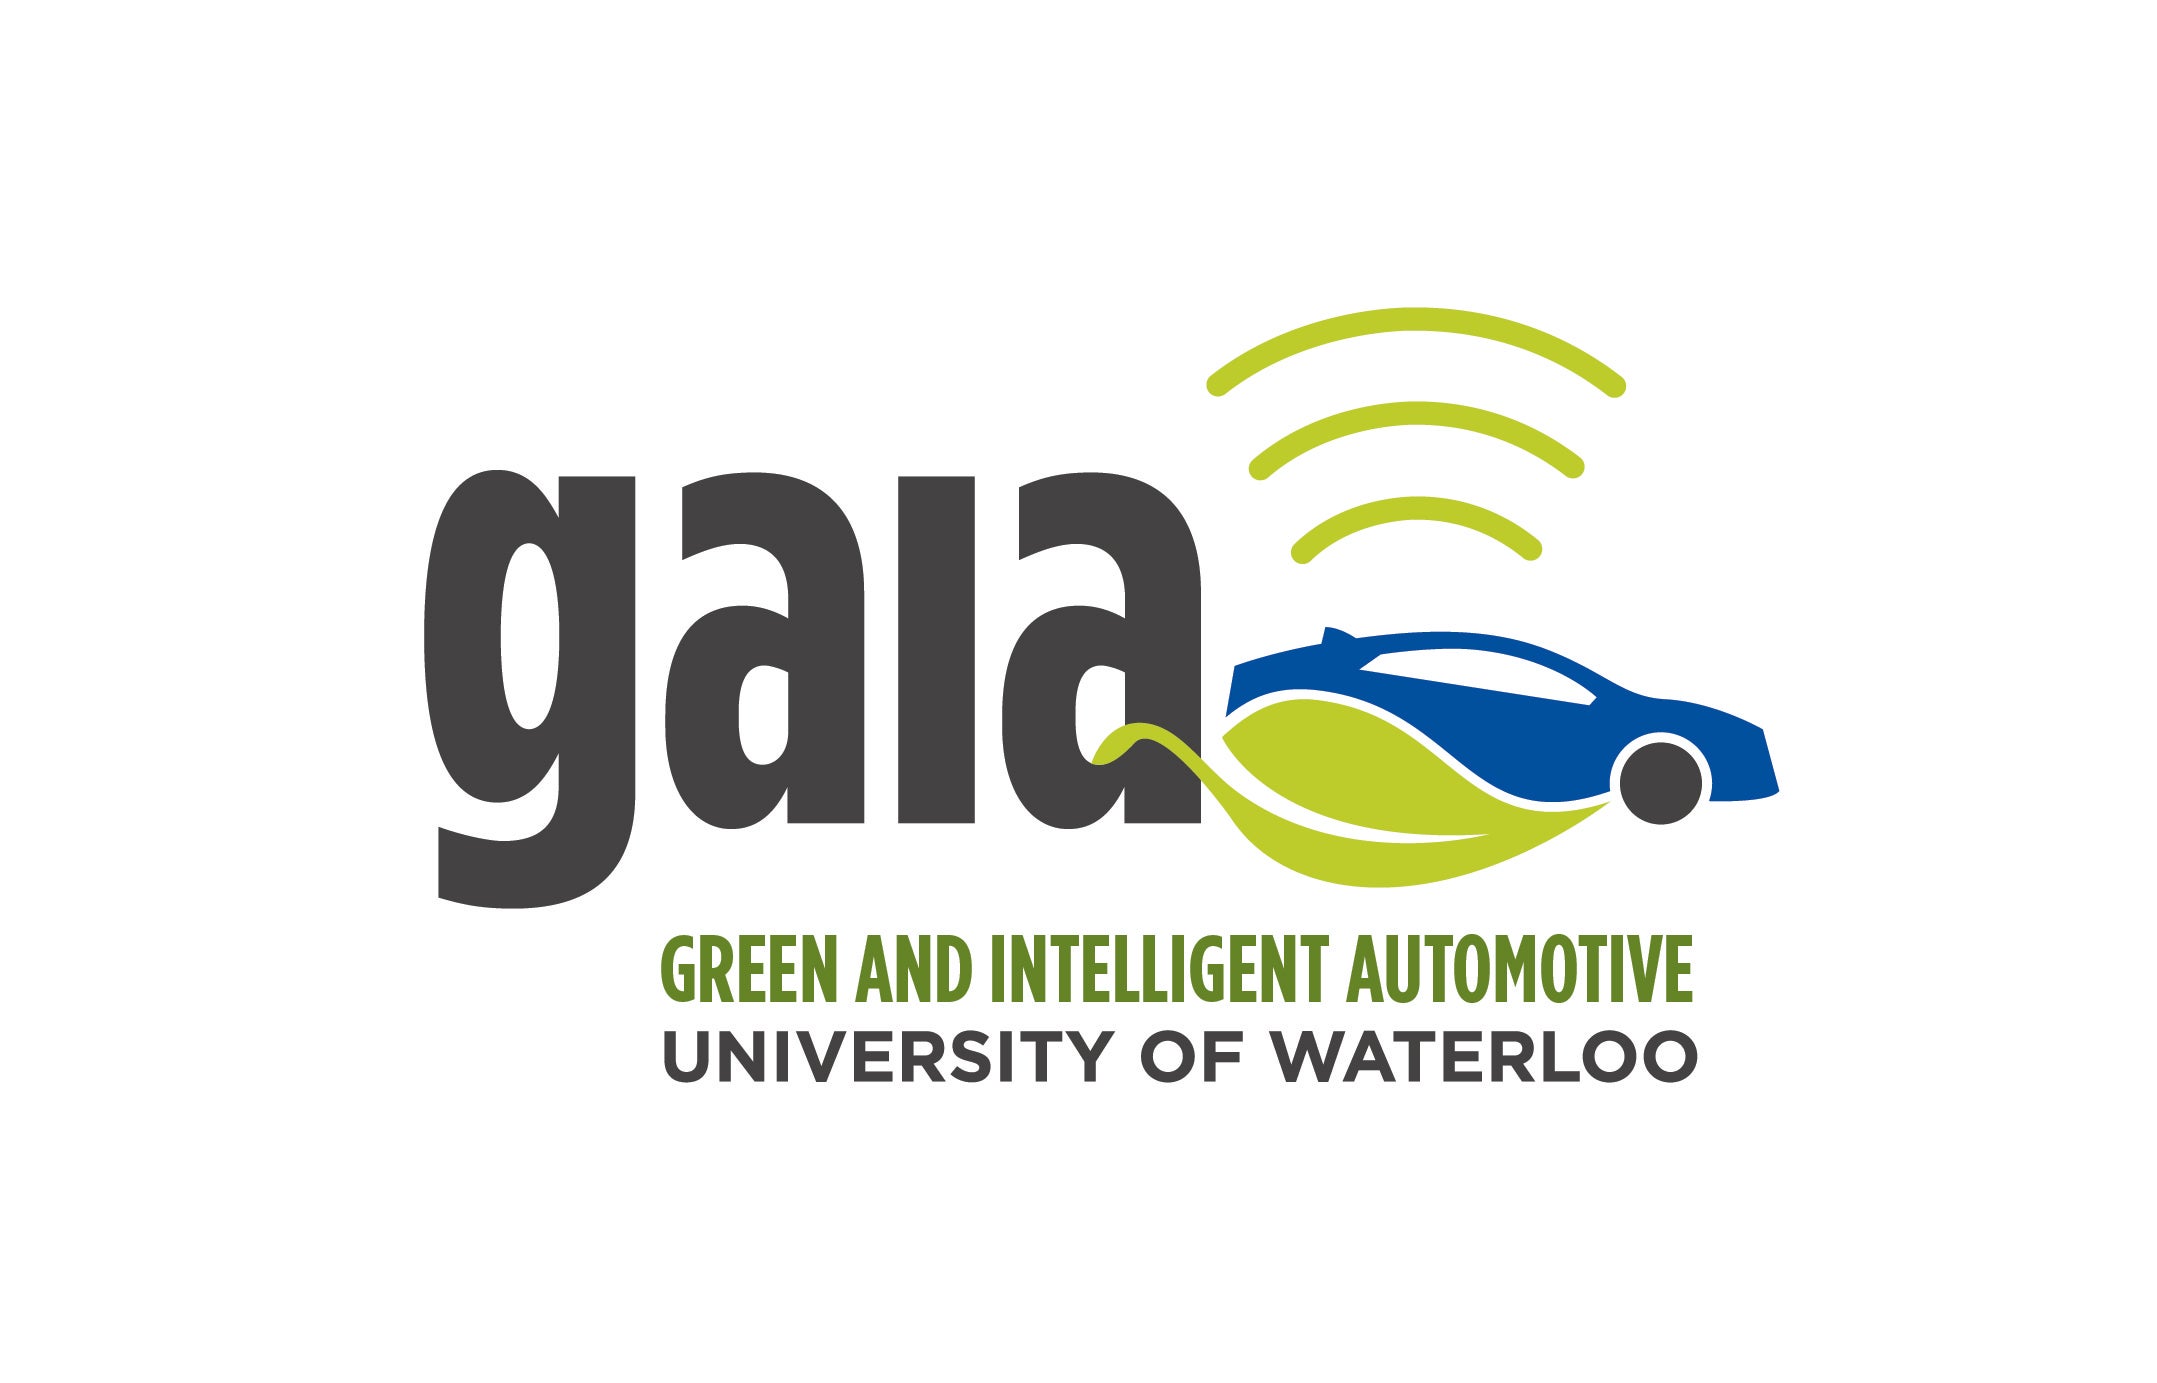 Green and Intelligent Automotive logo